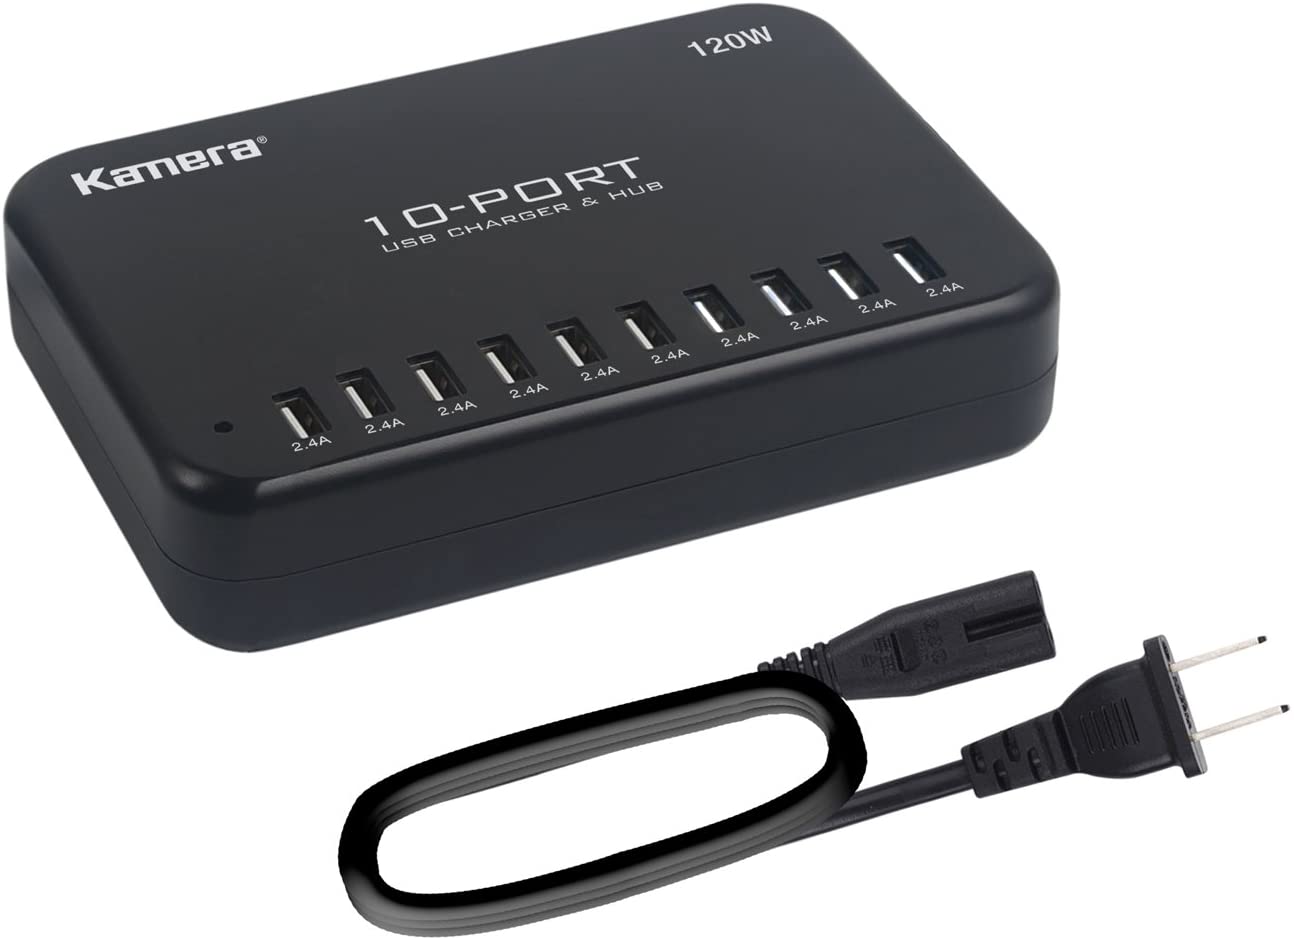 USB Charger 10-Port (120W/Multi-Port USB Charging Hub 24A/Desktop Power Station)